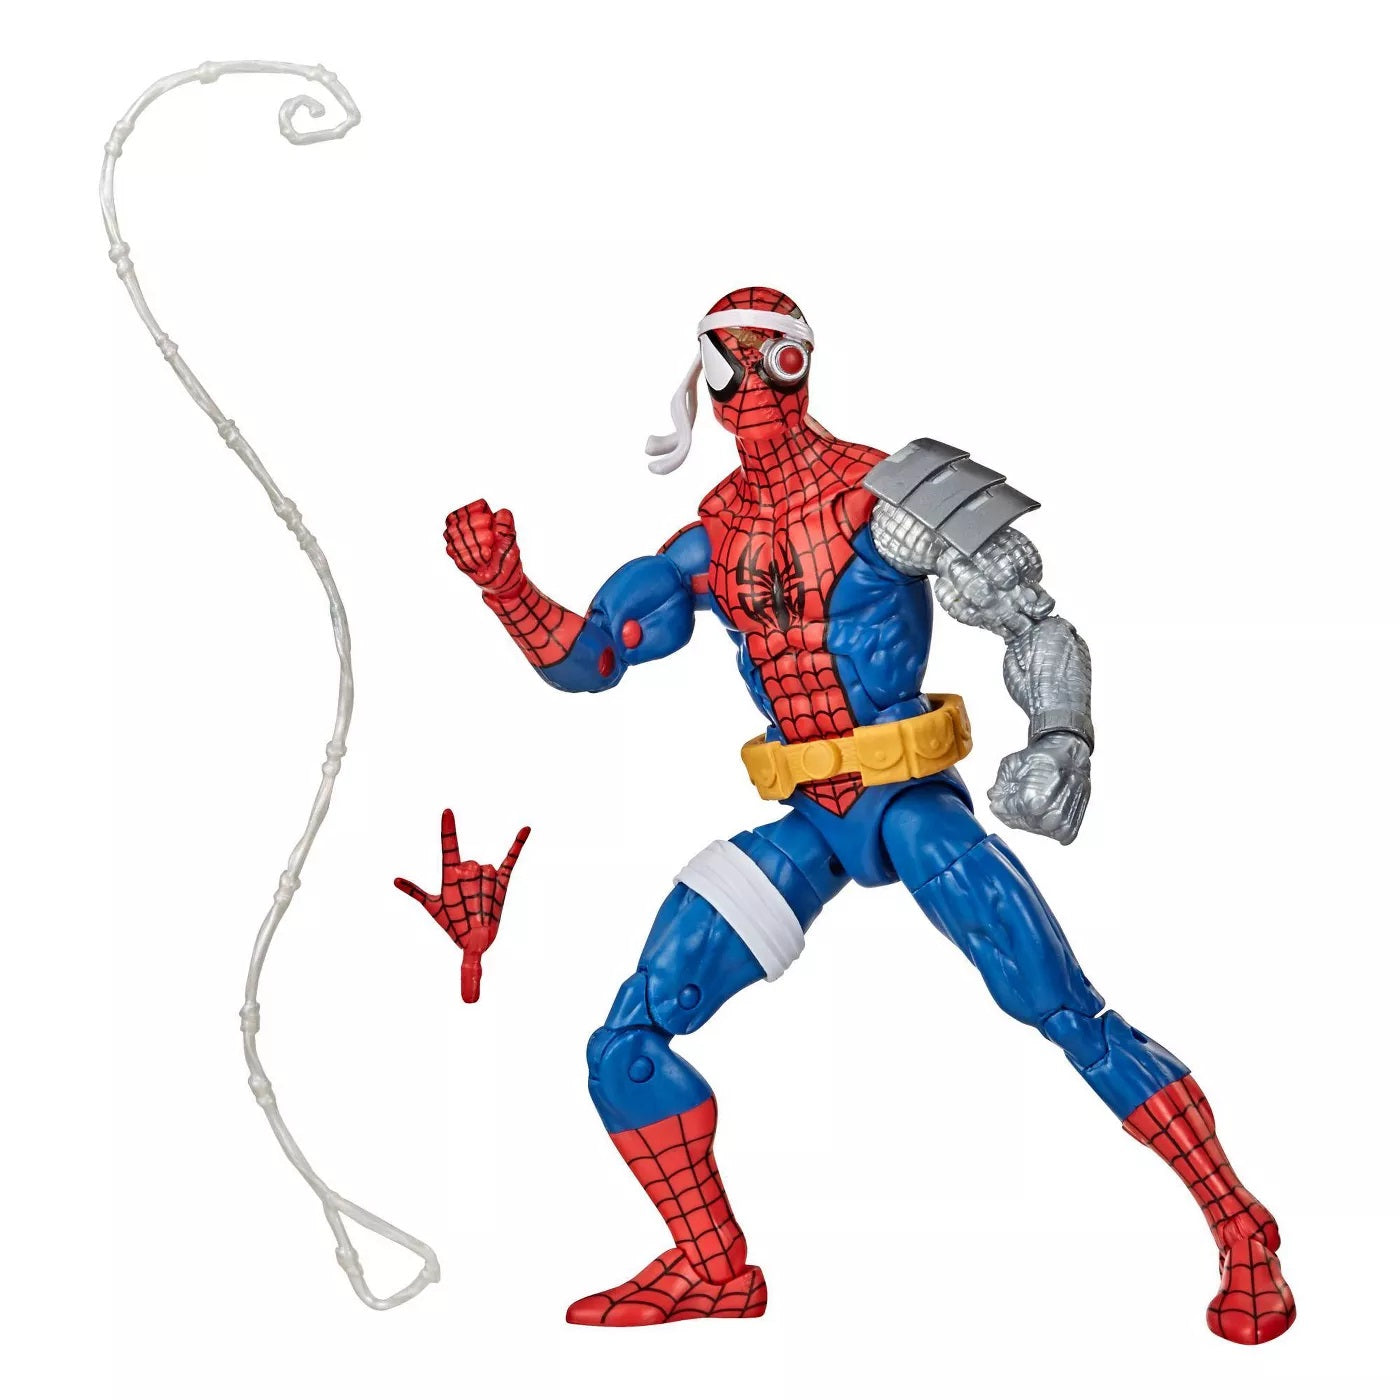 Retro Collection - Spider-Man - Cyborg Spider-Man [Target Exclusive]